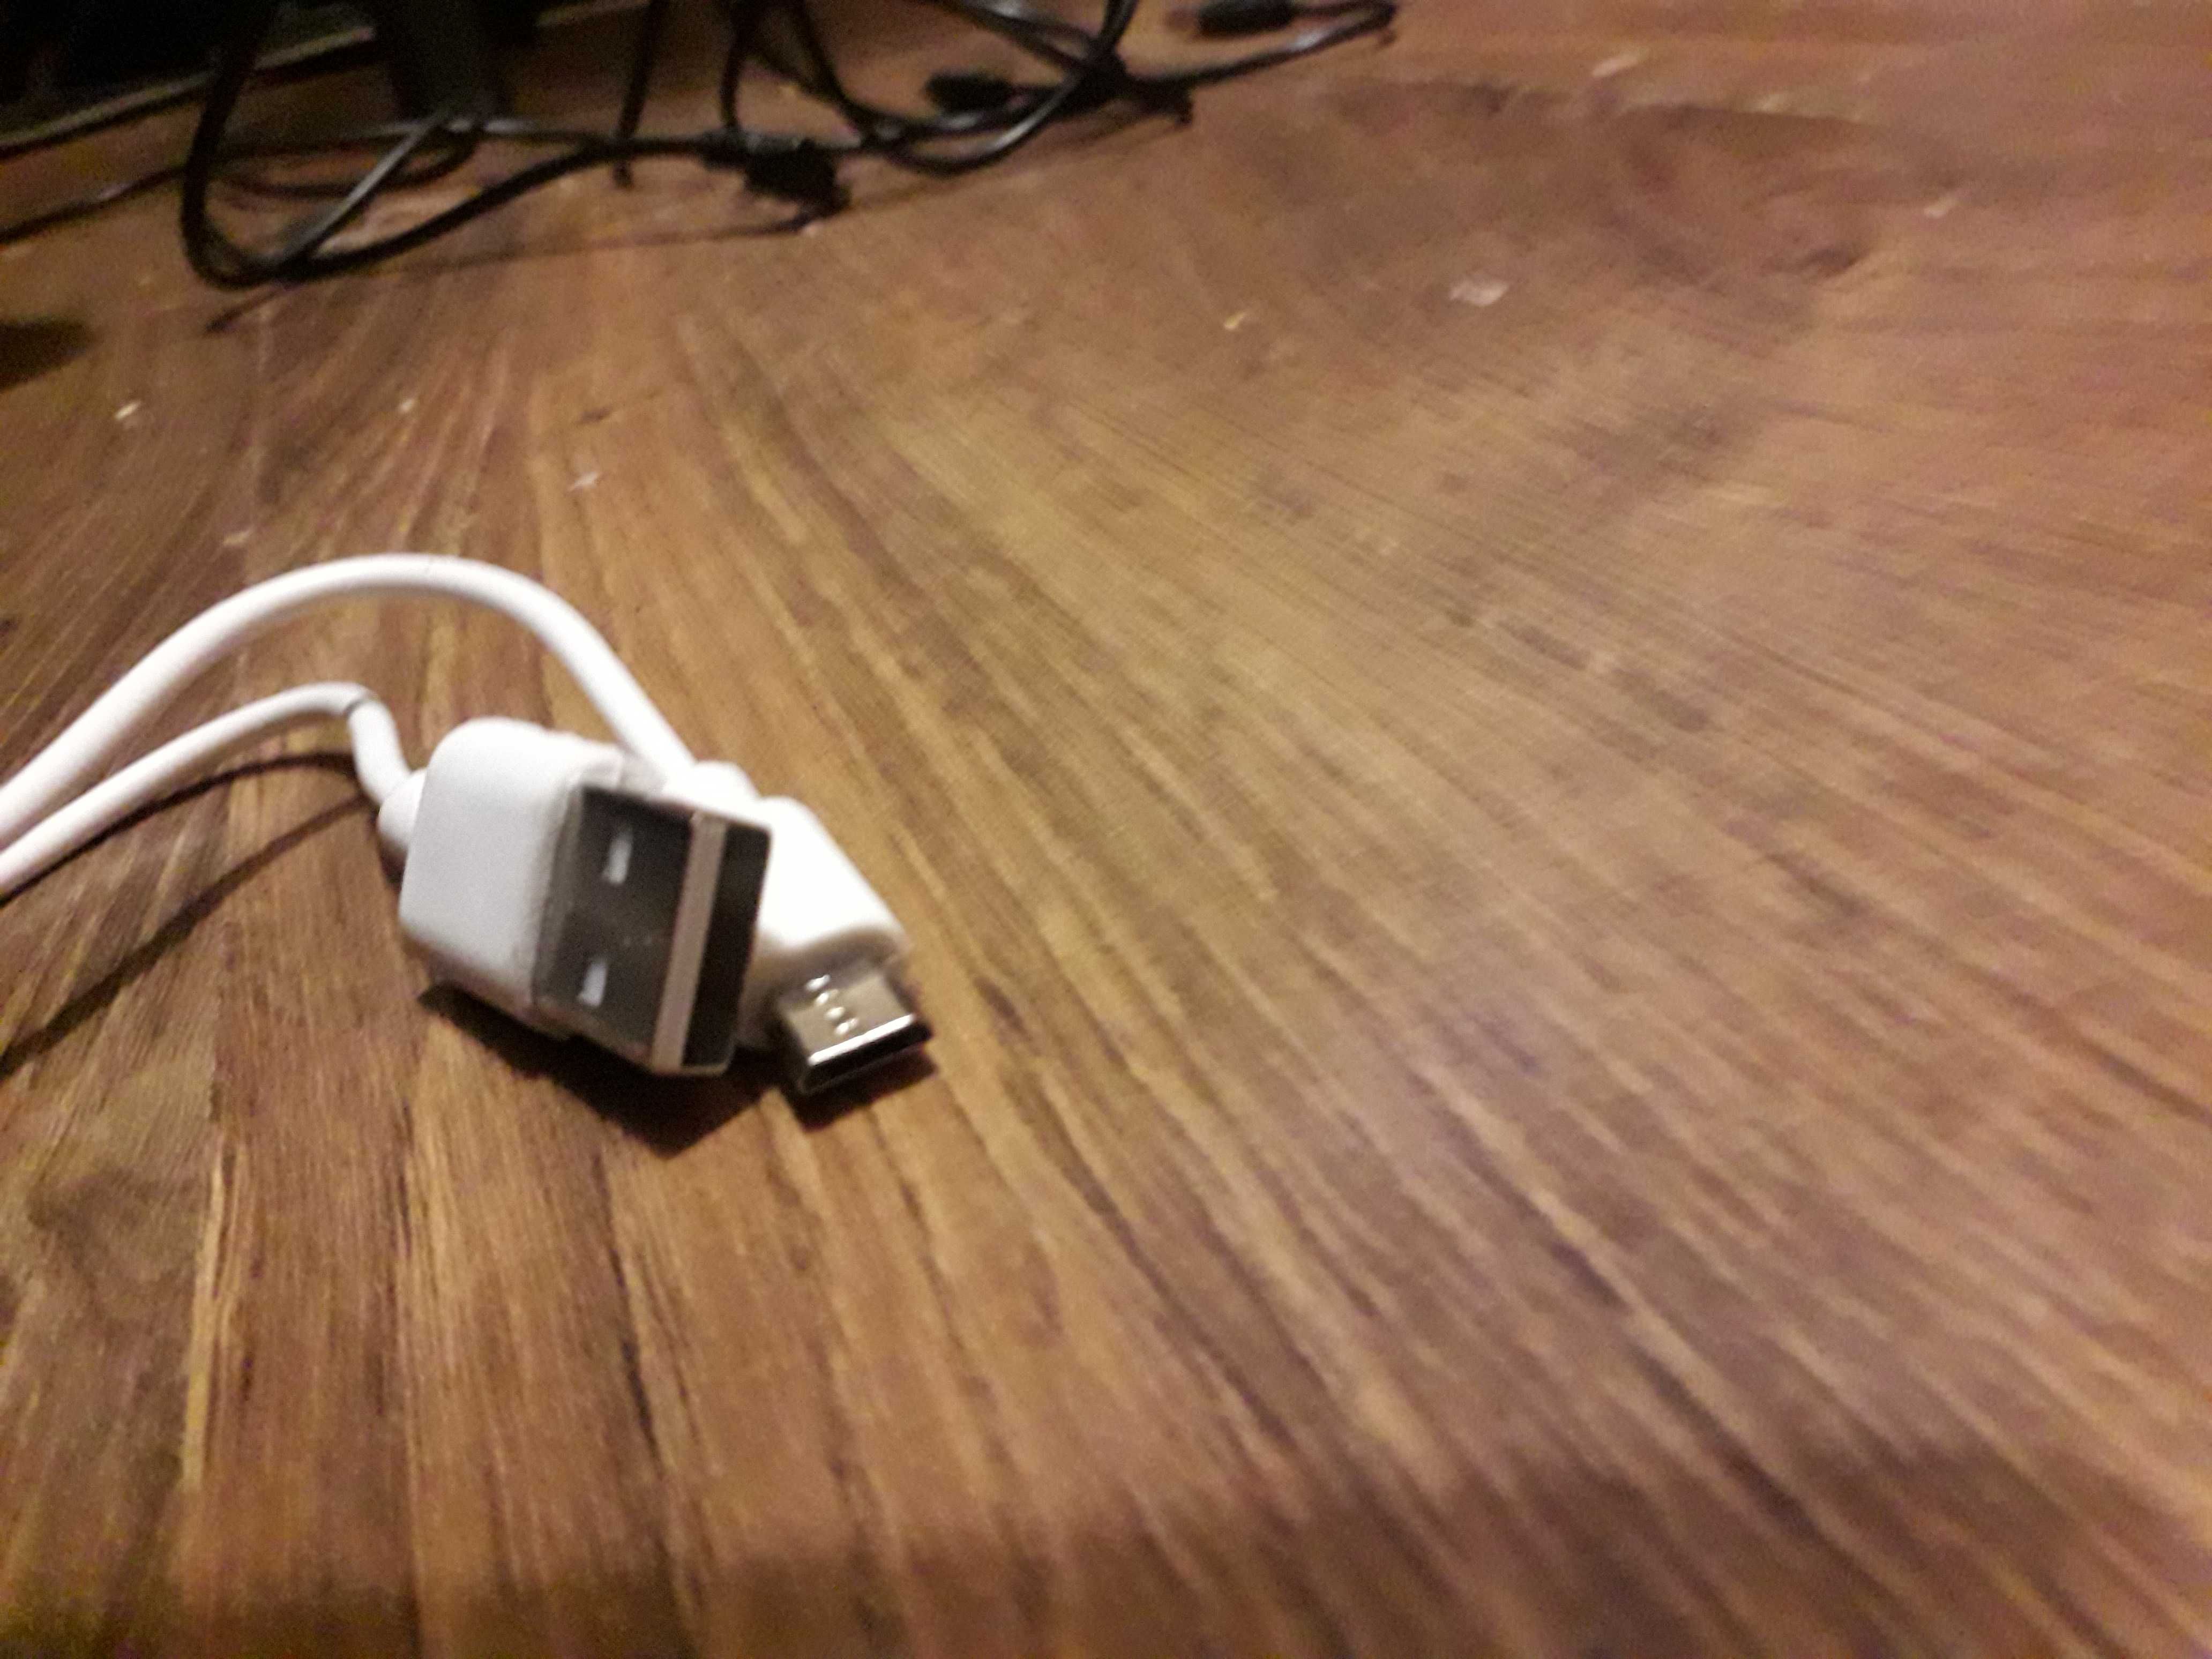 Kabel USB - Micro USB B